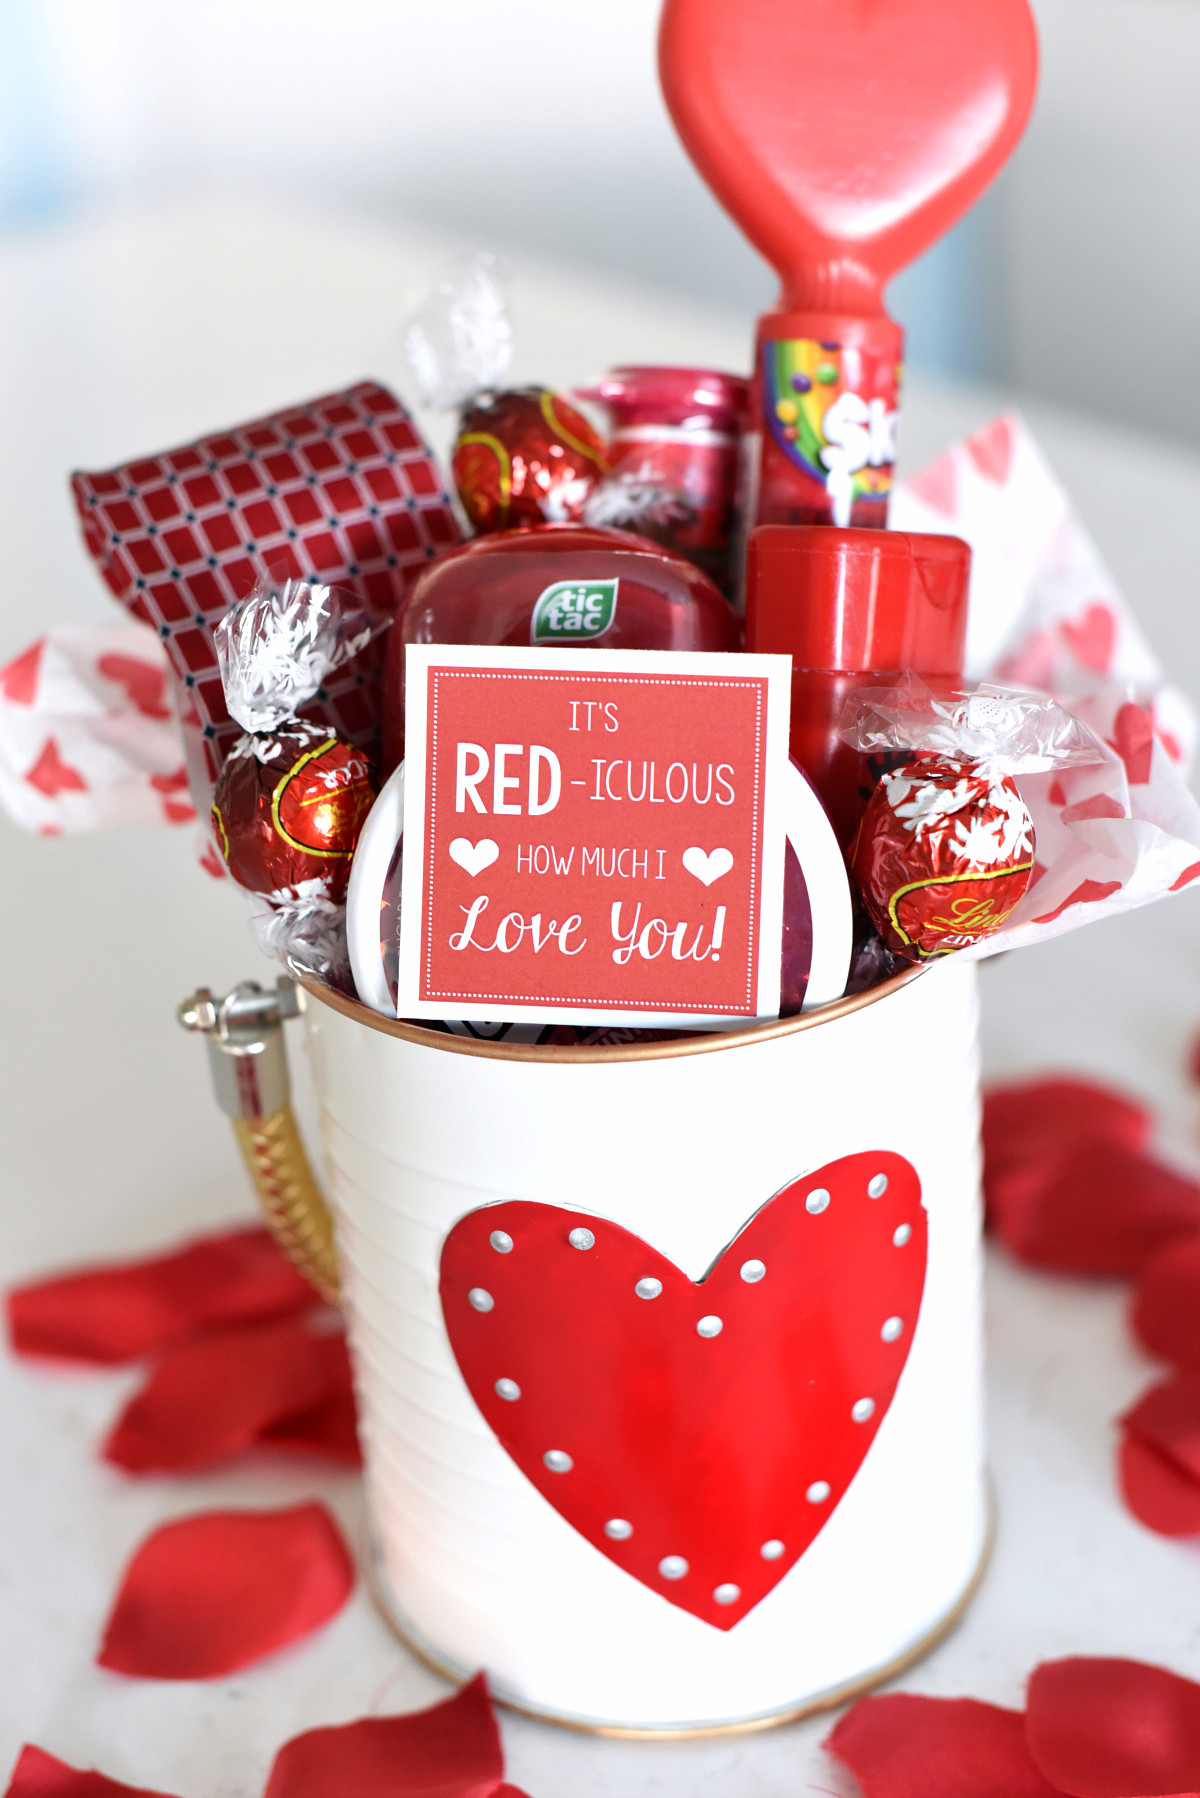 Boy Gift Ideas For Valentines
 25 DIY Valentine s Day Gift Ideas Teens Will Love